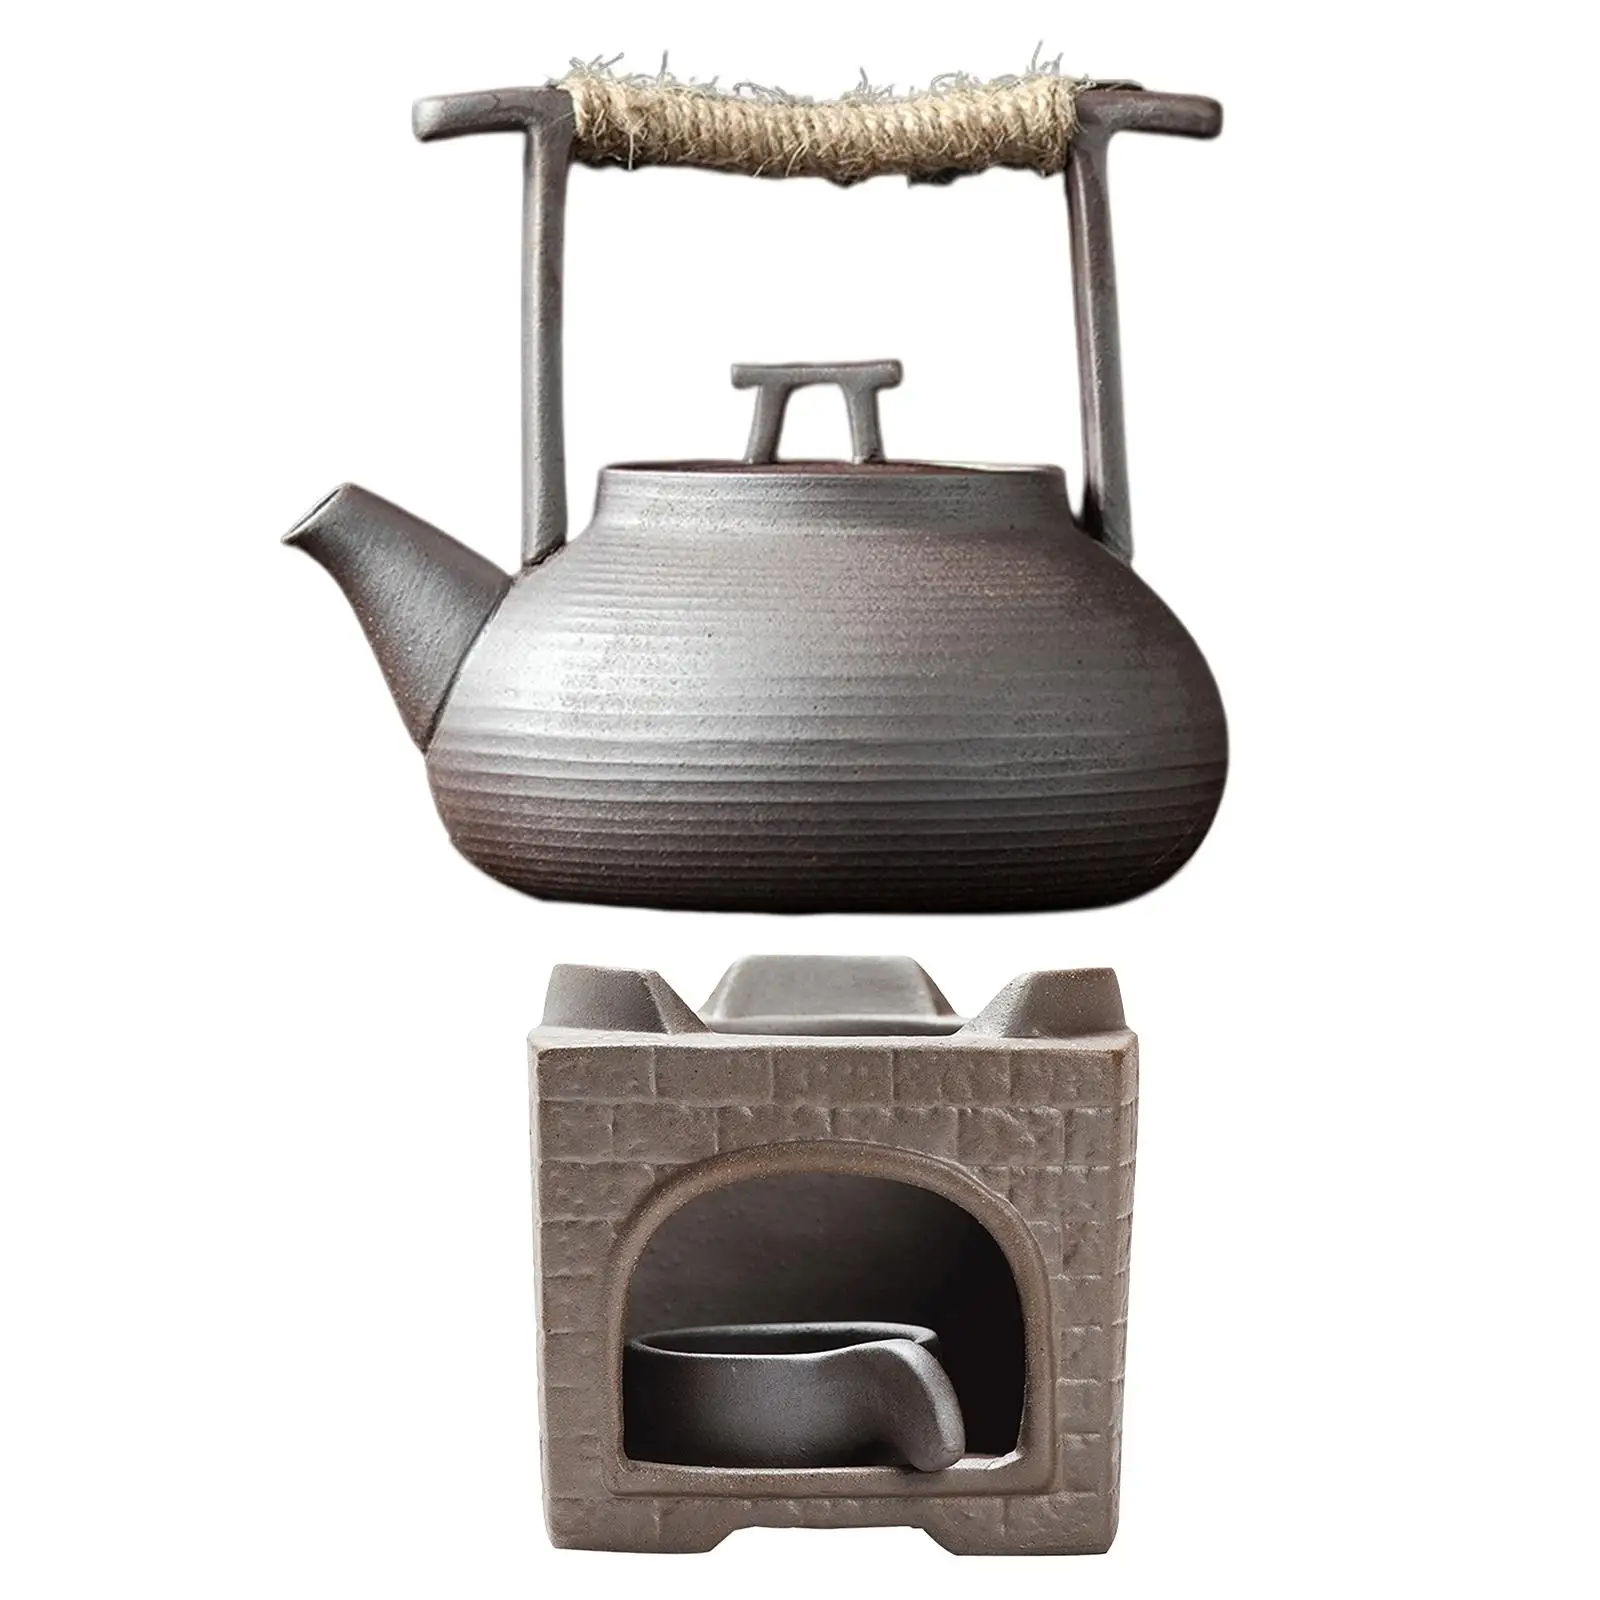 Ceramic Tea Kettle Teapot Handmade Teapot Warmer Water Pot Portable Pot Kung Fu Teapot for Home Teahouse Camping